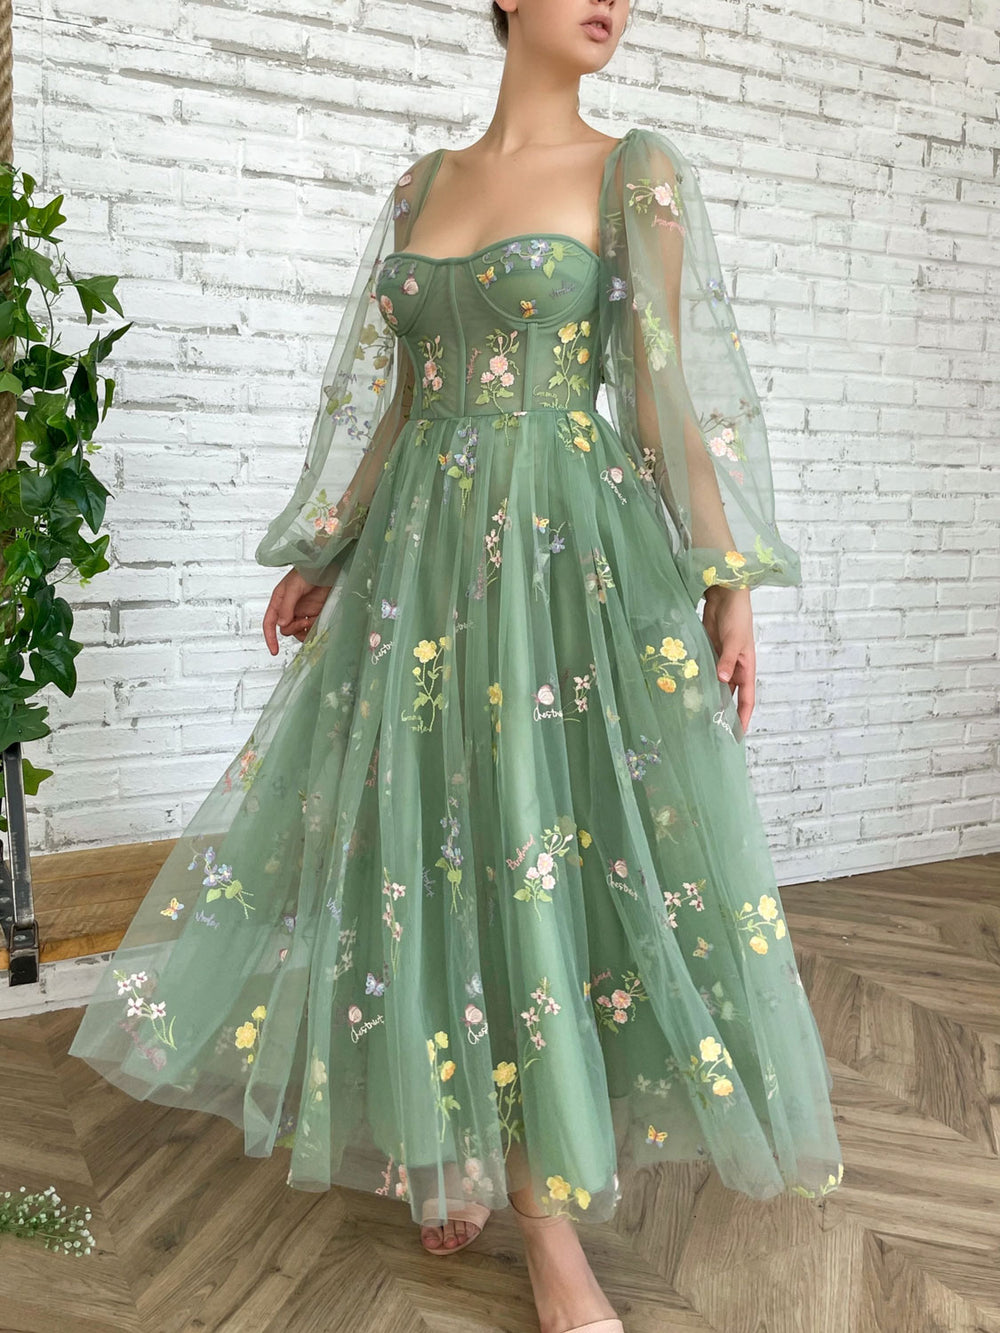 Green tulle lace tea length prom dress, green evening dress